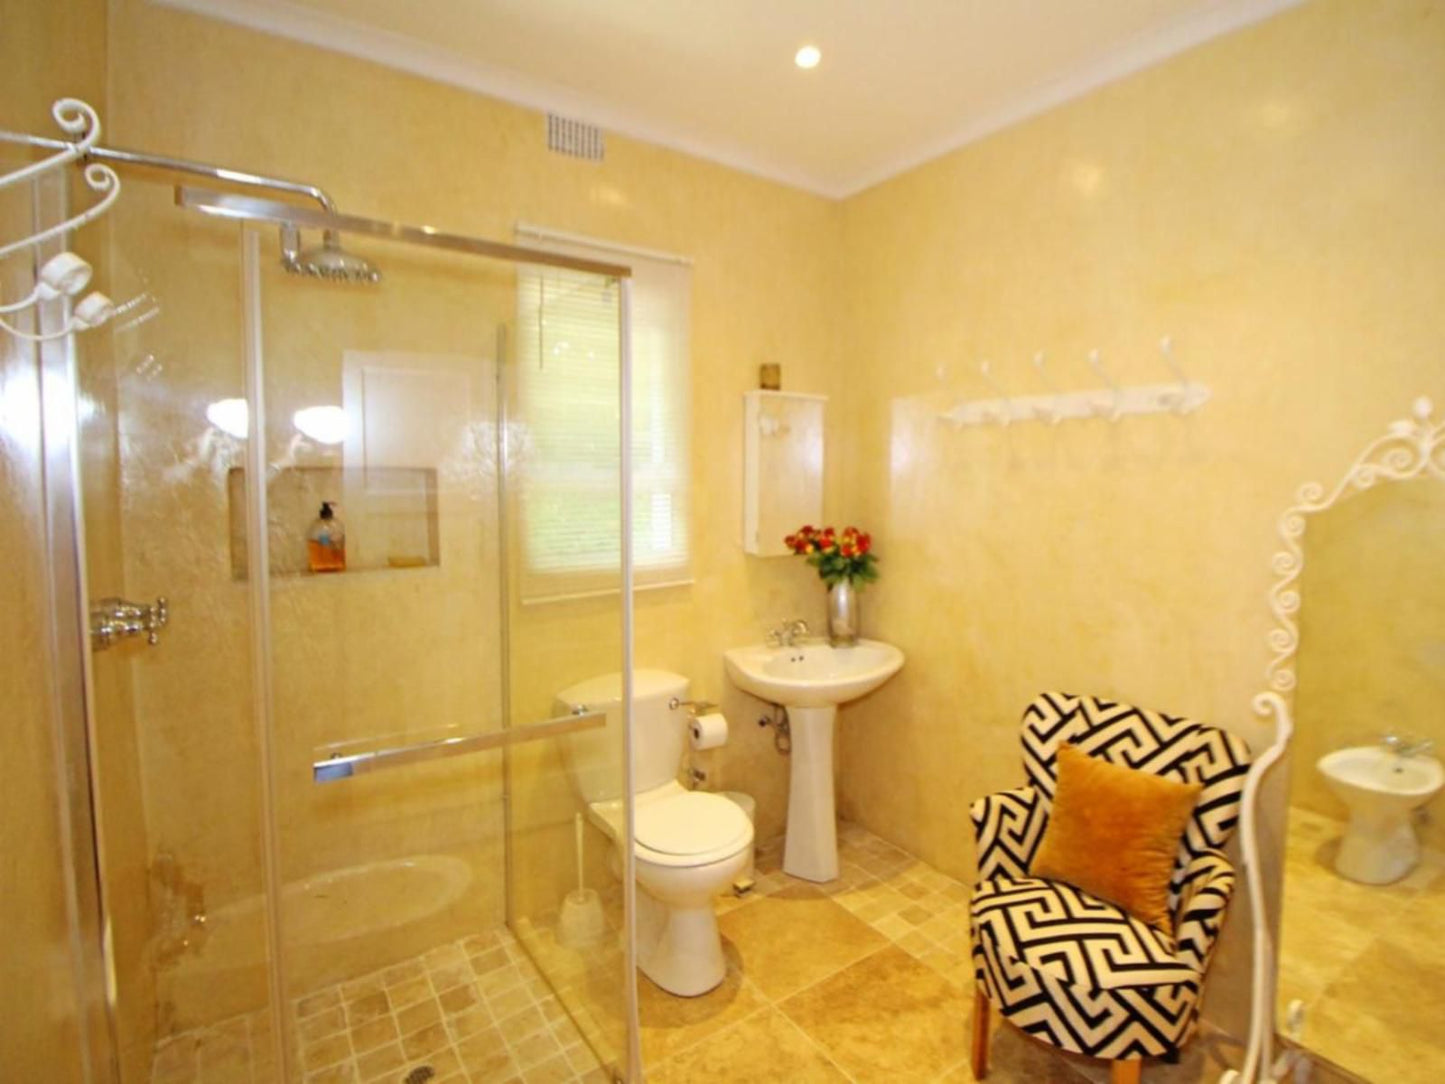 8 Breach Street Plett Central Plettenberg Bay Western Cape South Africa Sepia Tones, Bathroom